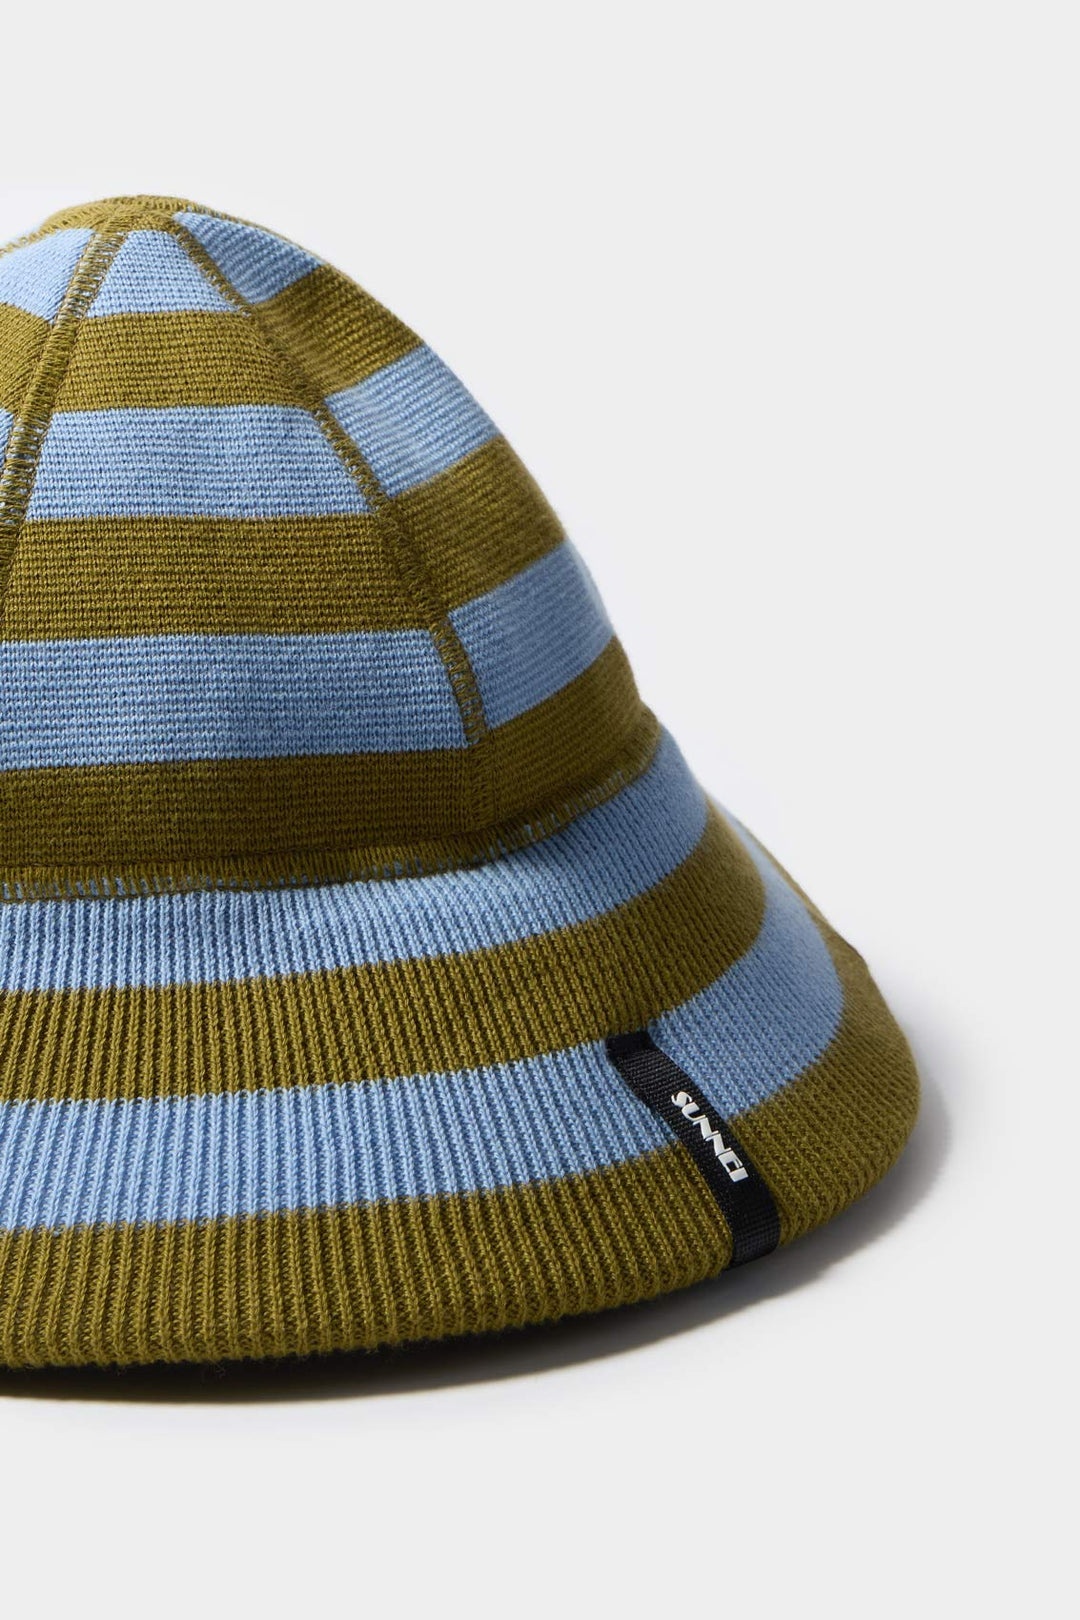 MAGLIAUNITA BUCKET HAT / green and blue stripes - 4